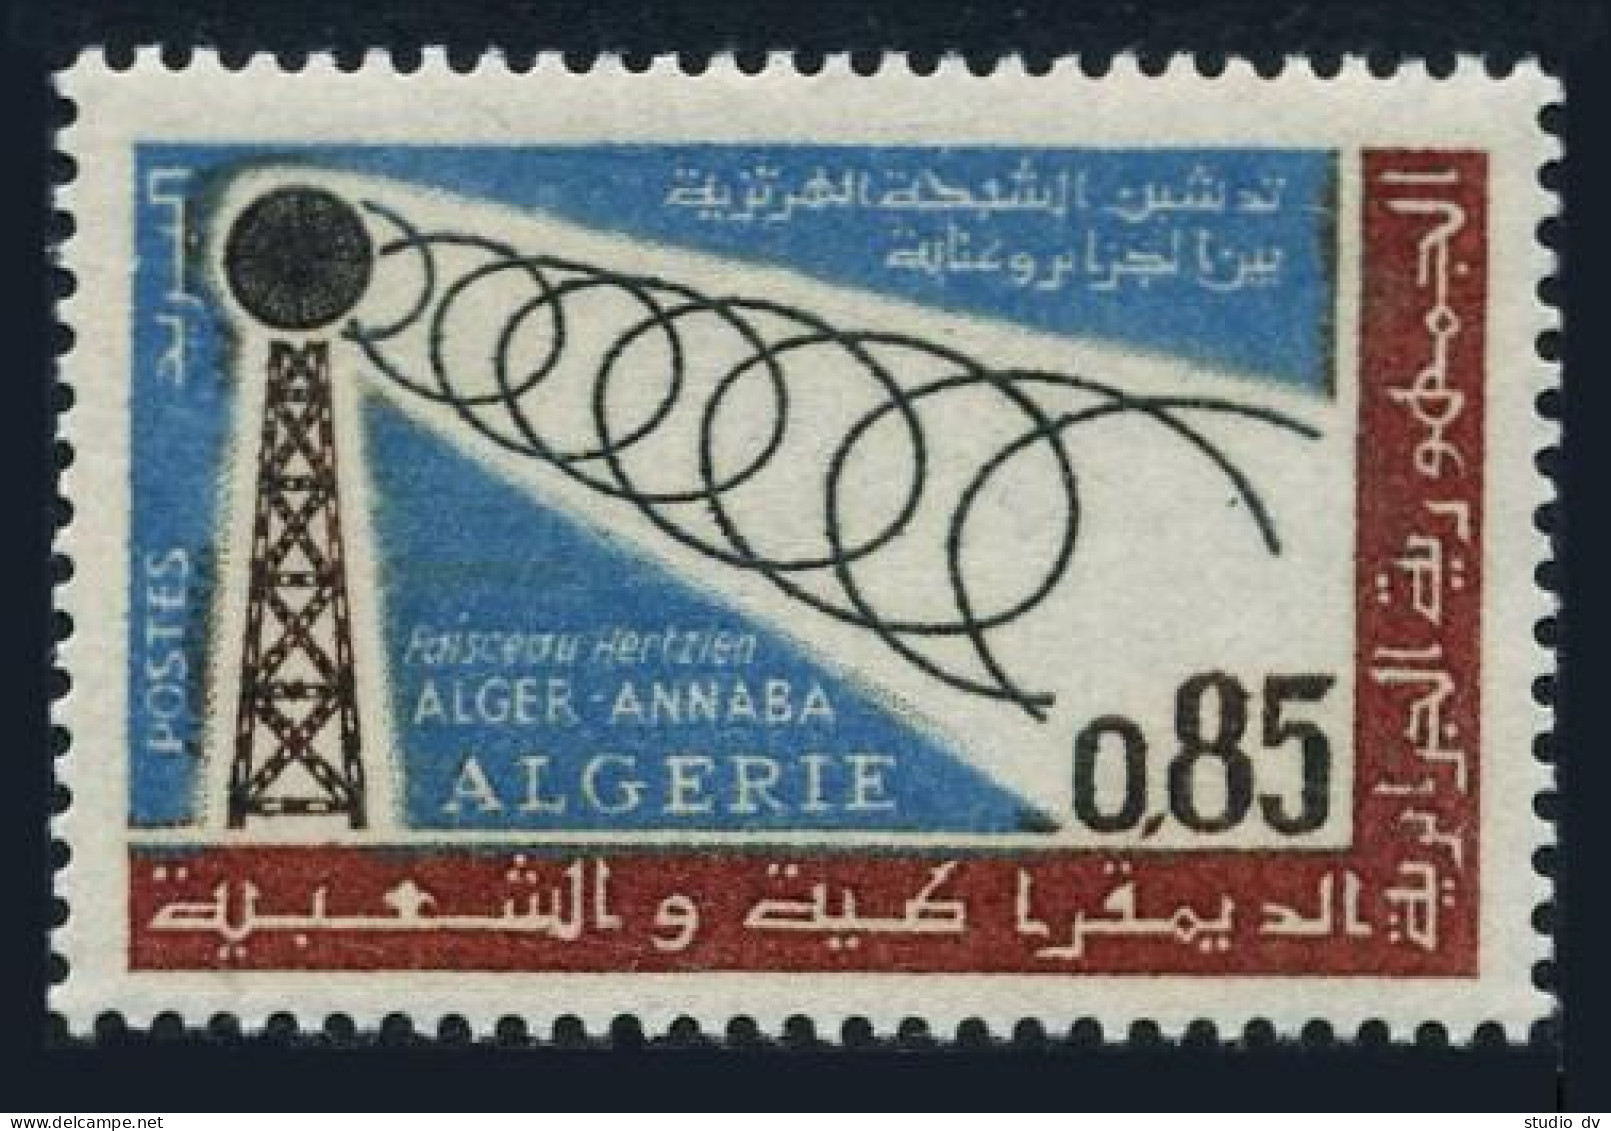 Algeria 331,MNH.Michel 430. Communications Tower,1964. - Algerije (1962-...)